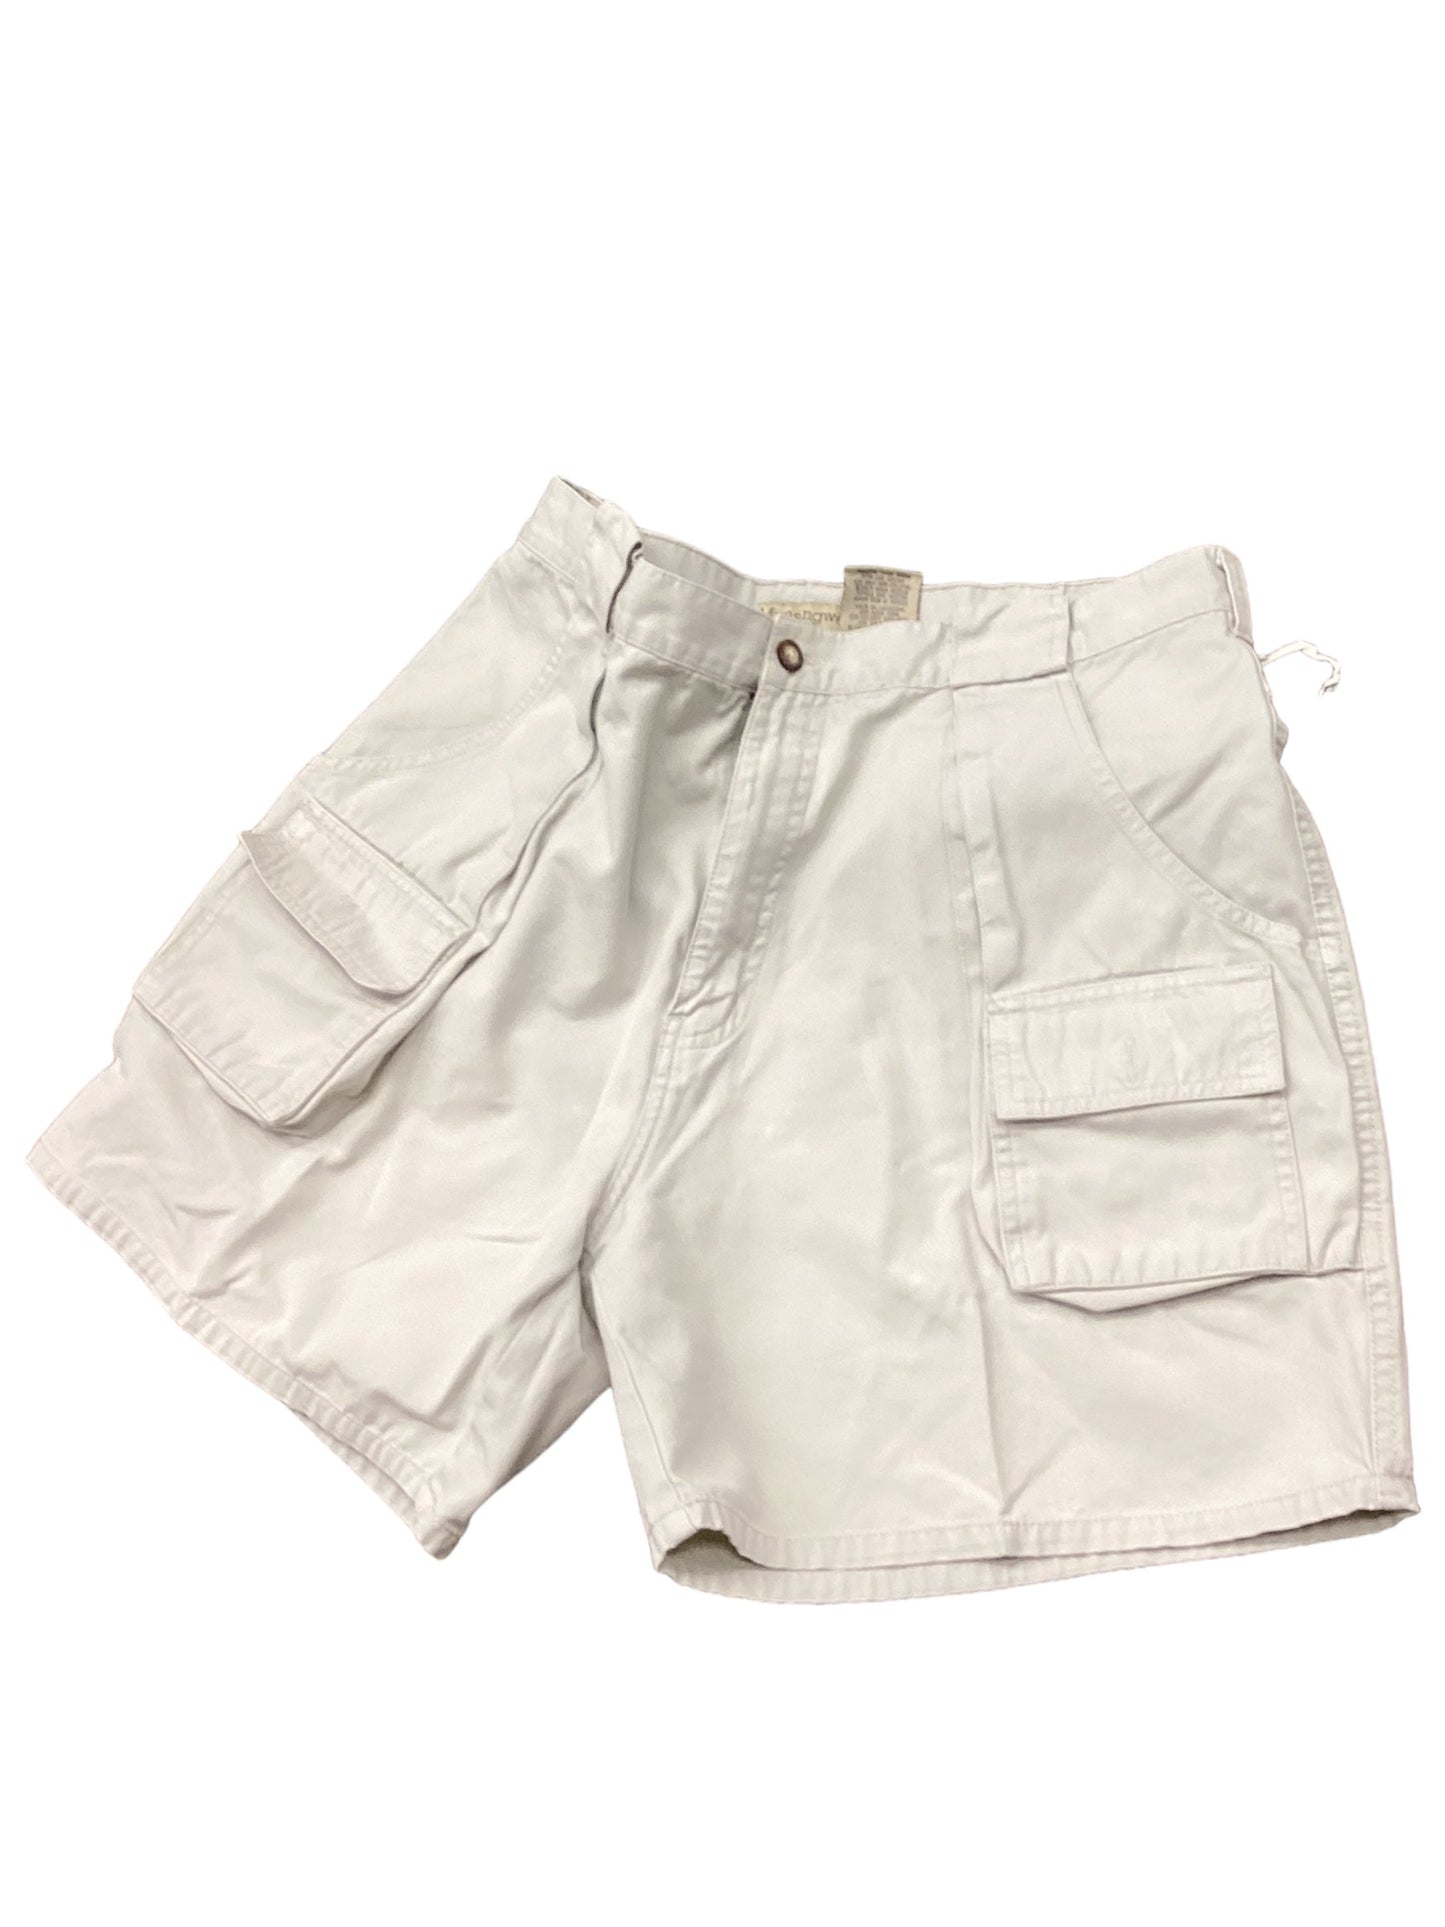 Tan Shorts Clothes Mentor, Size 36